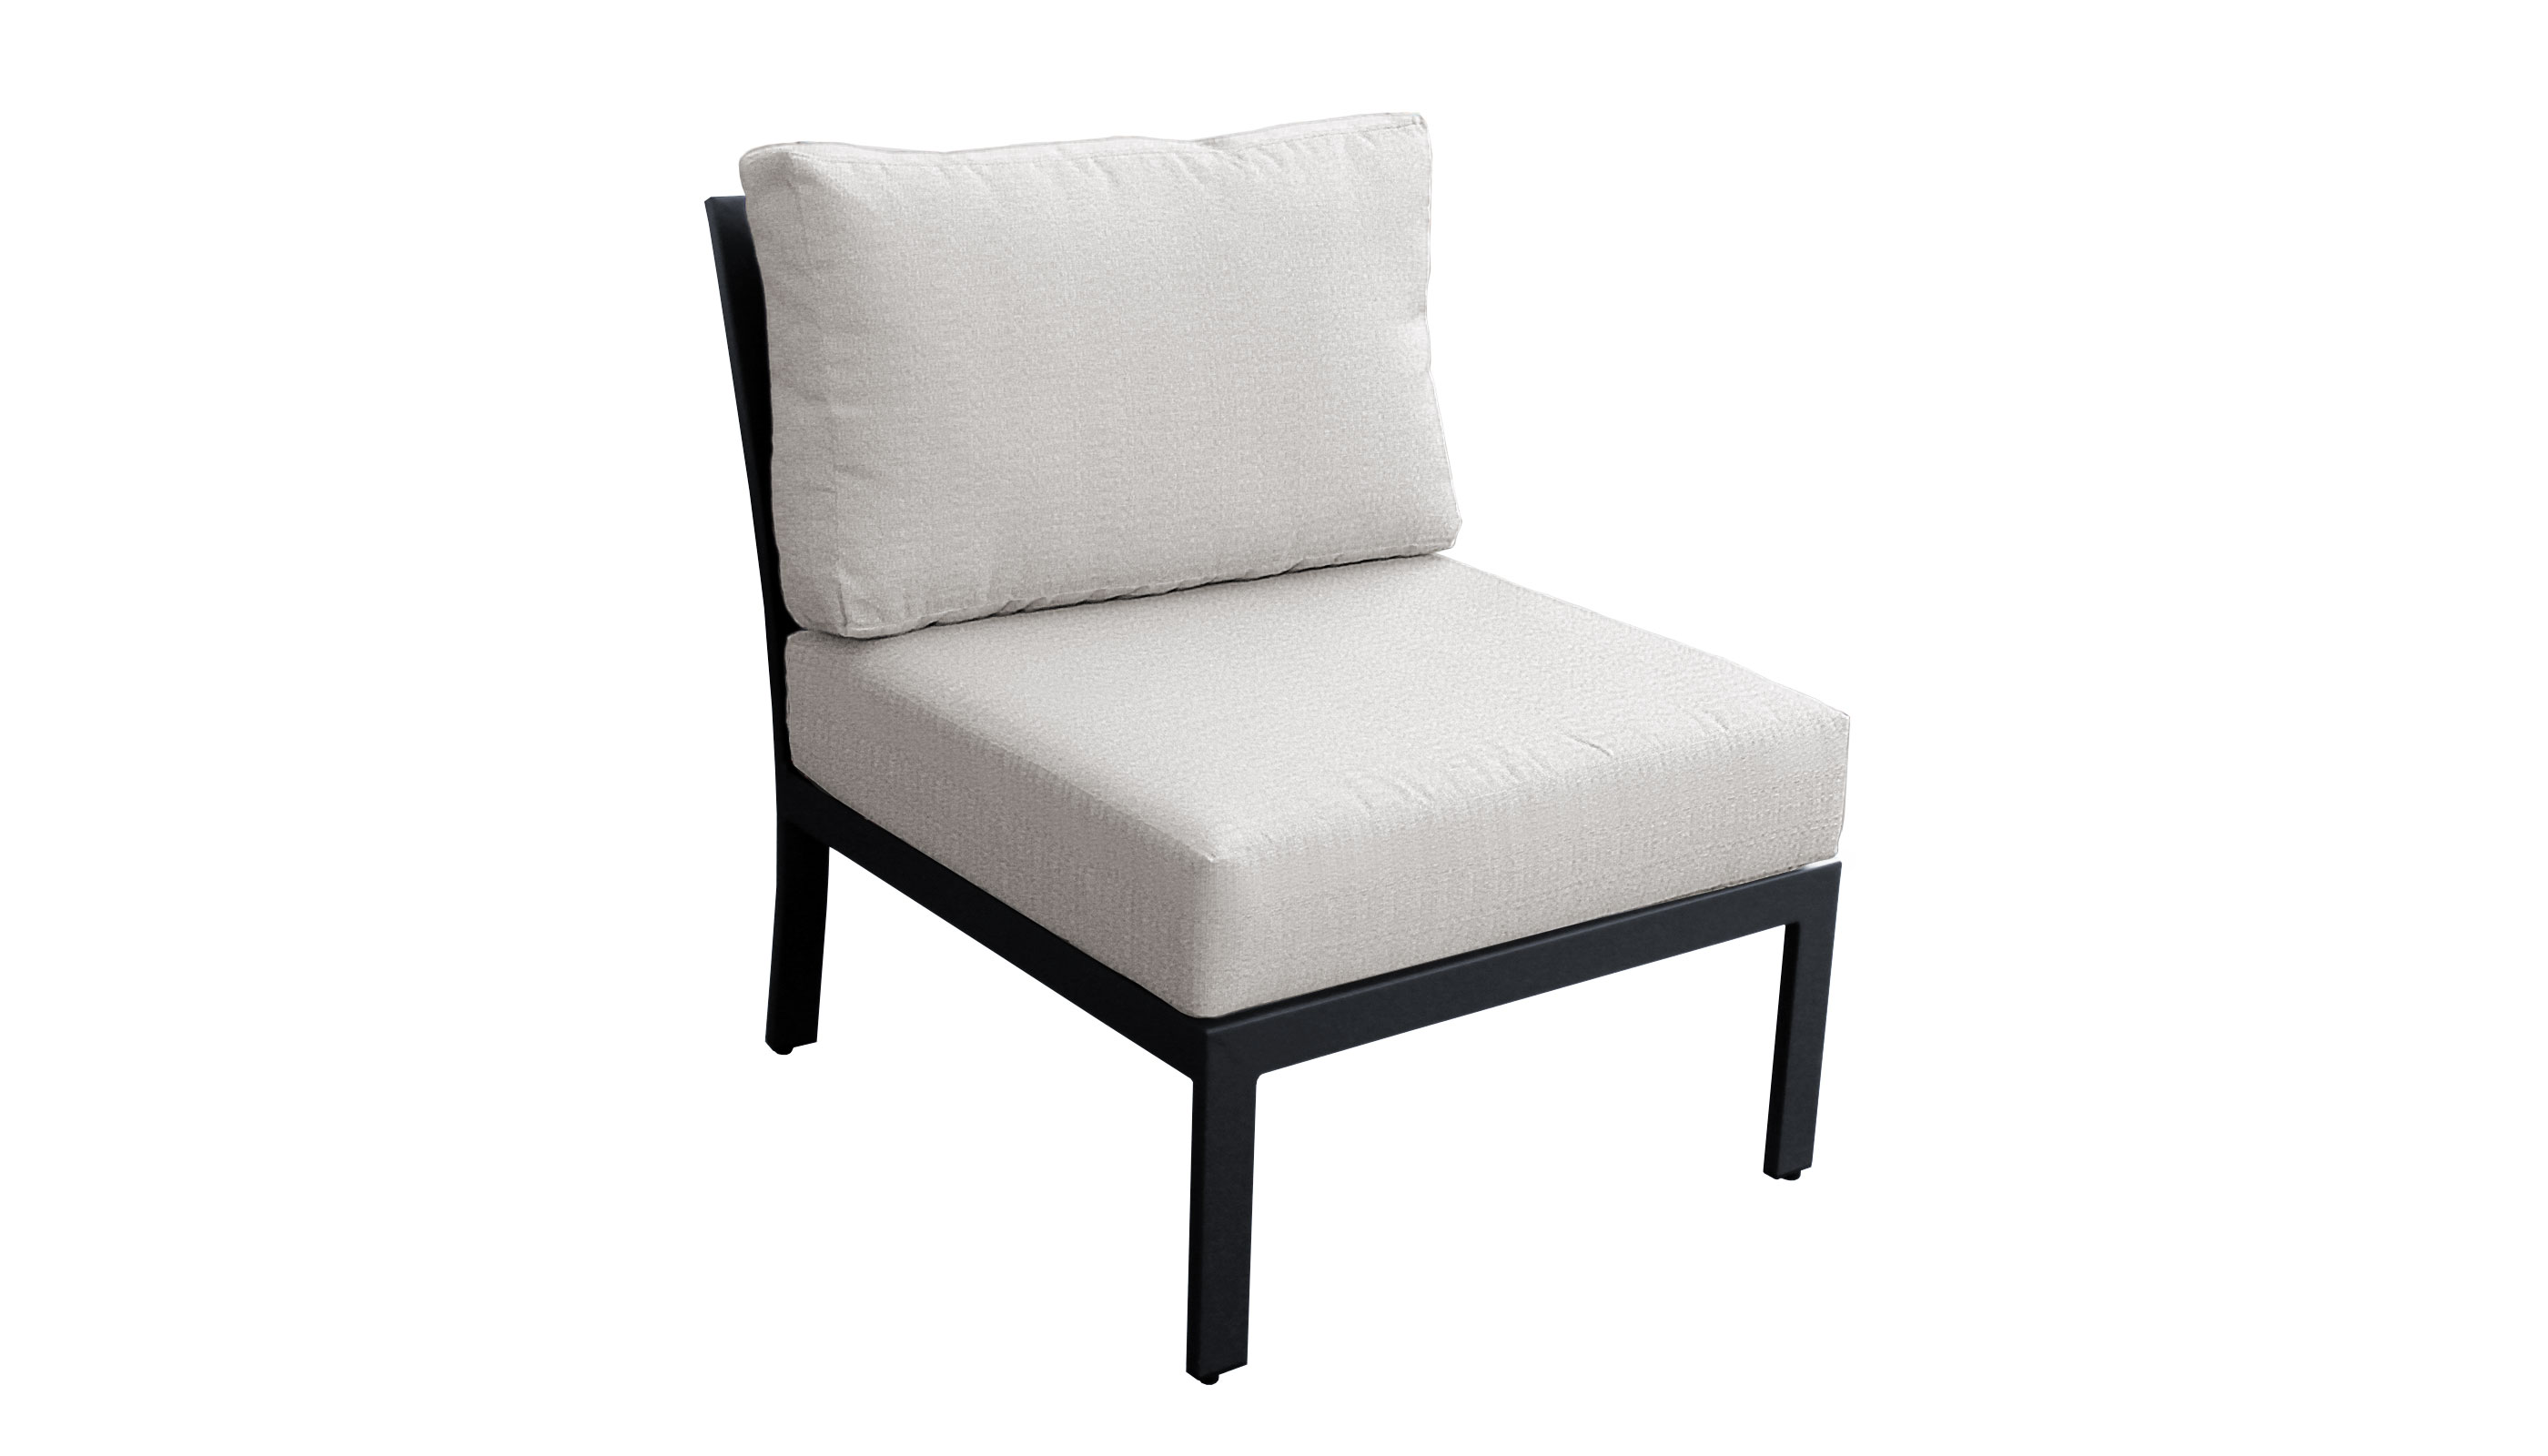 Lexington 3 Piece Outdoor Aluminum Patio Furniture Set 03c - TK Classics